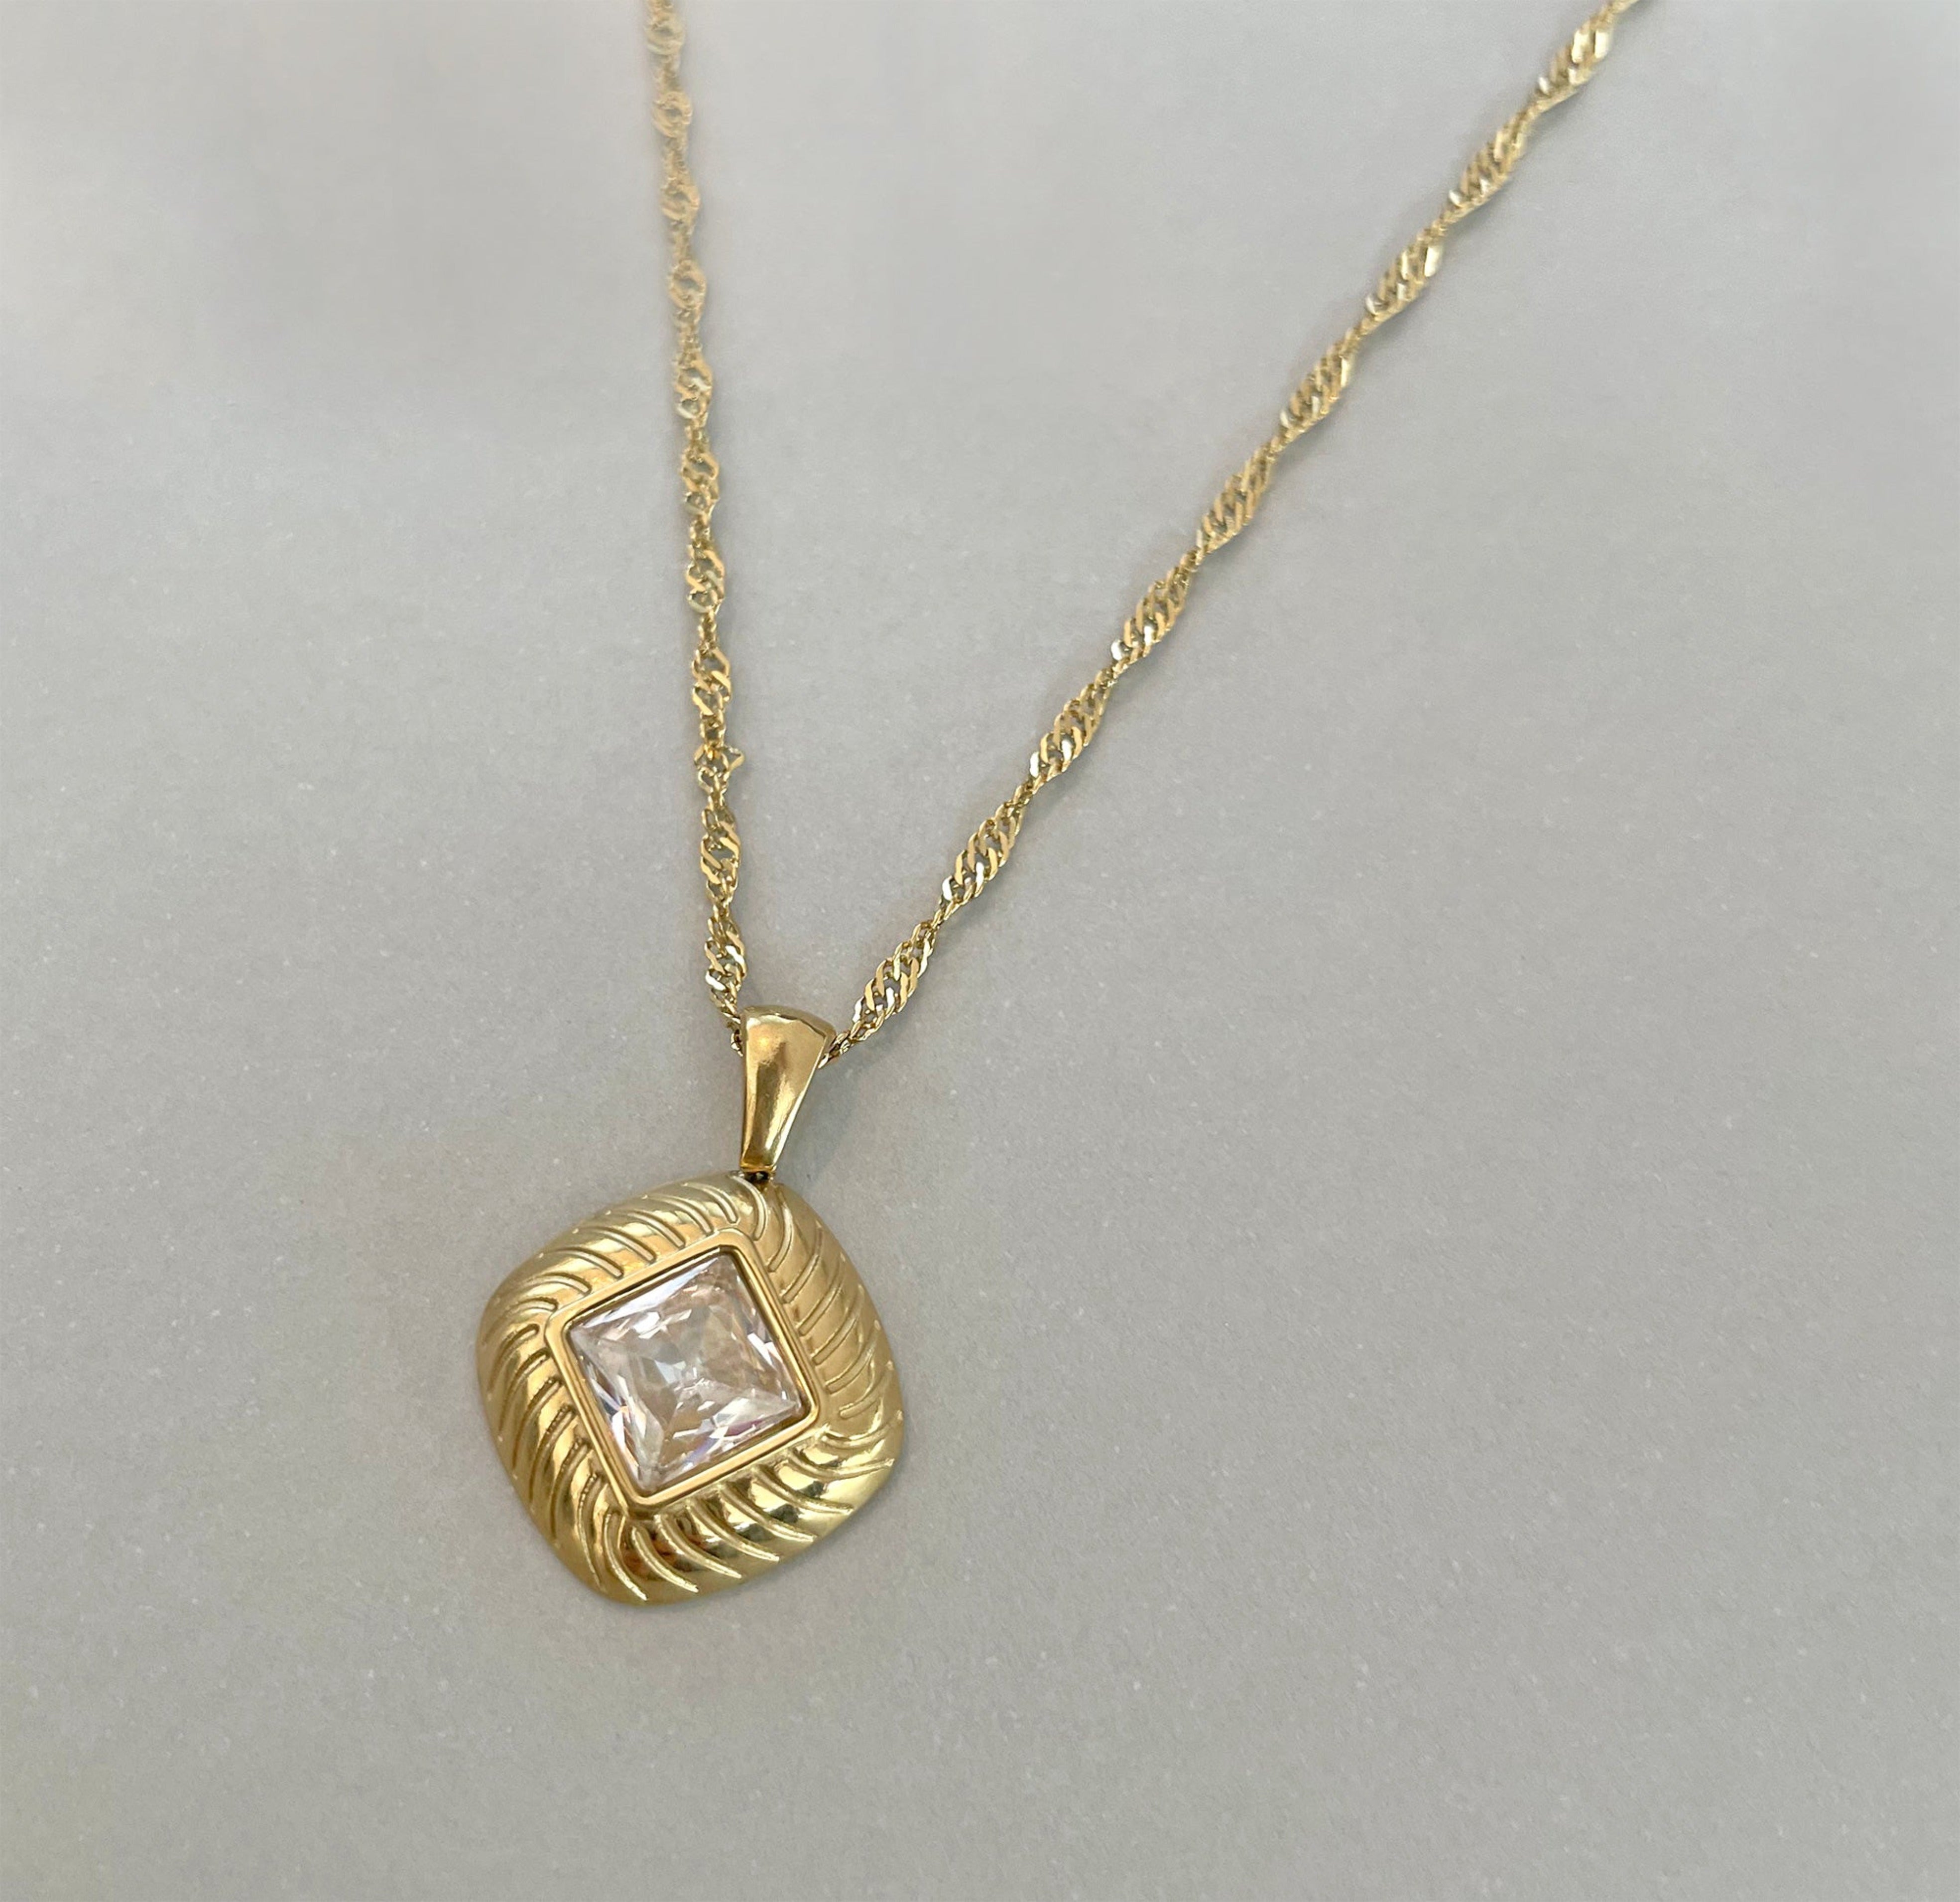 gold vintage pendant necklace waterproof jewelry